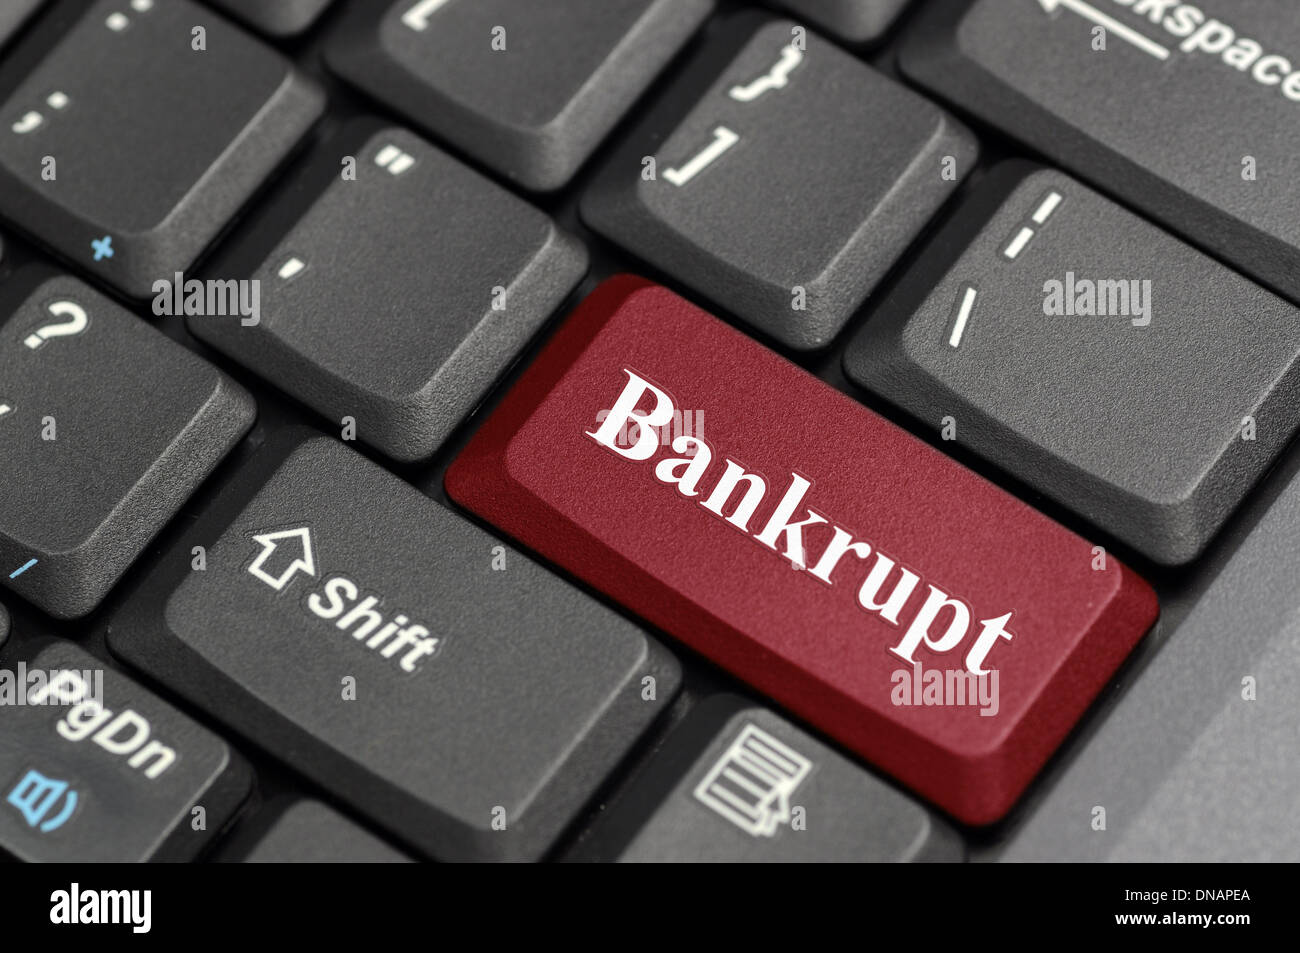 Bankrupt key on keyboard Stock Photo